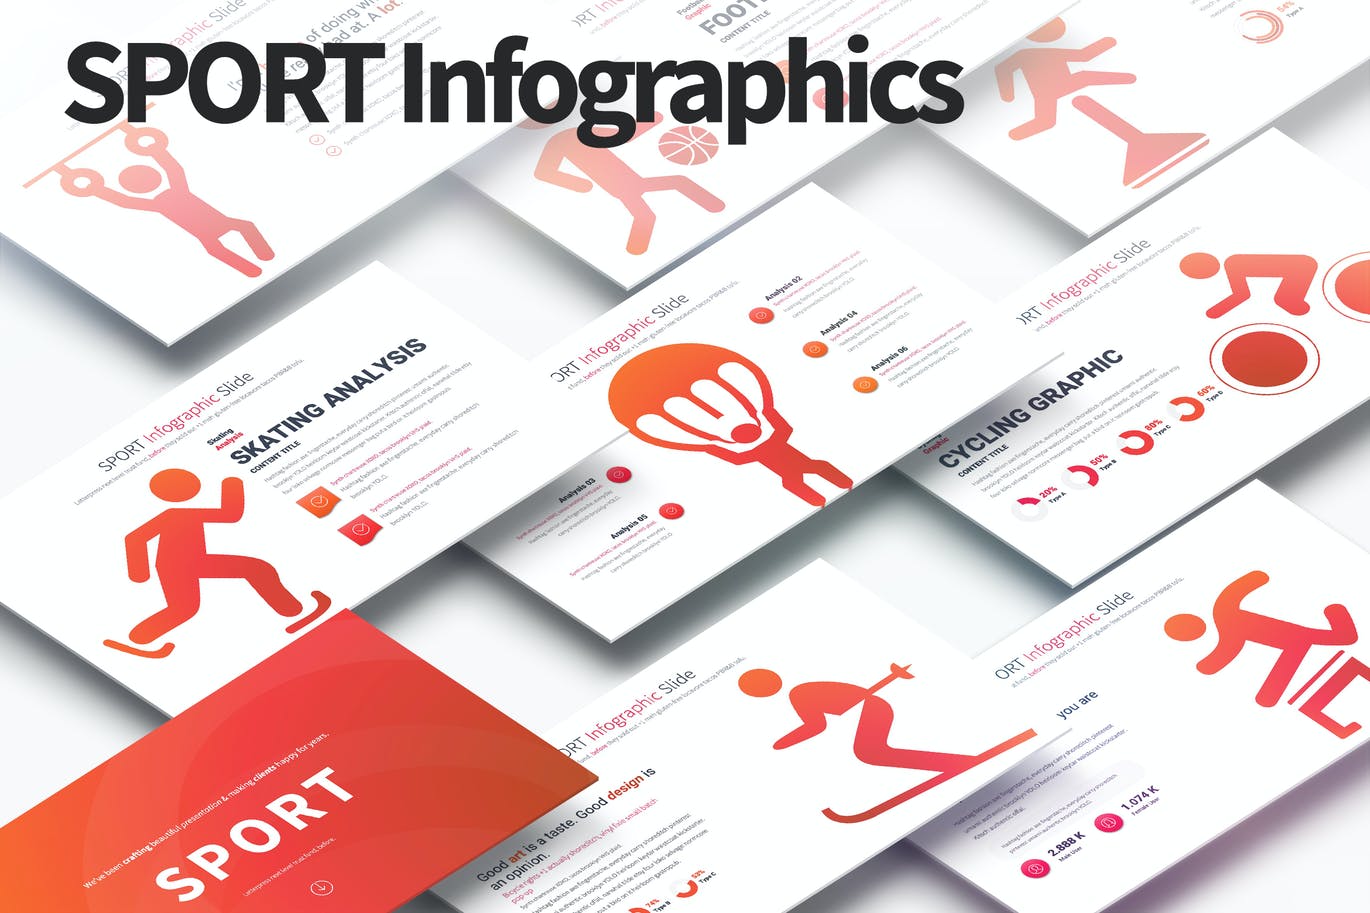 SPORT - PowerPoint Infographics Slides